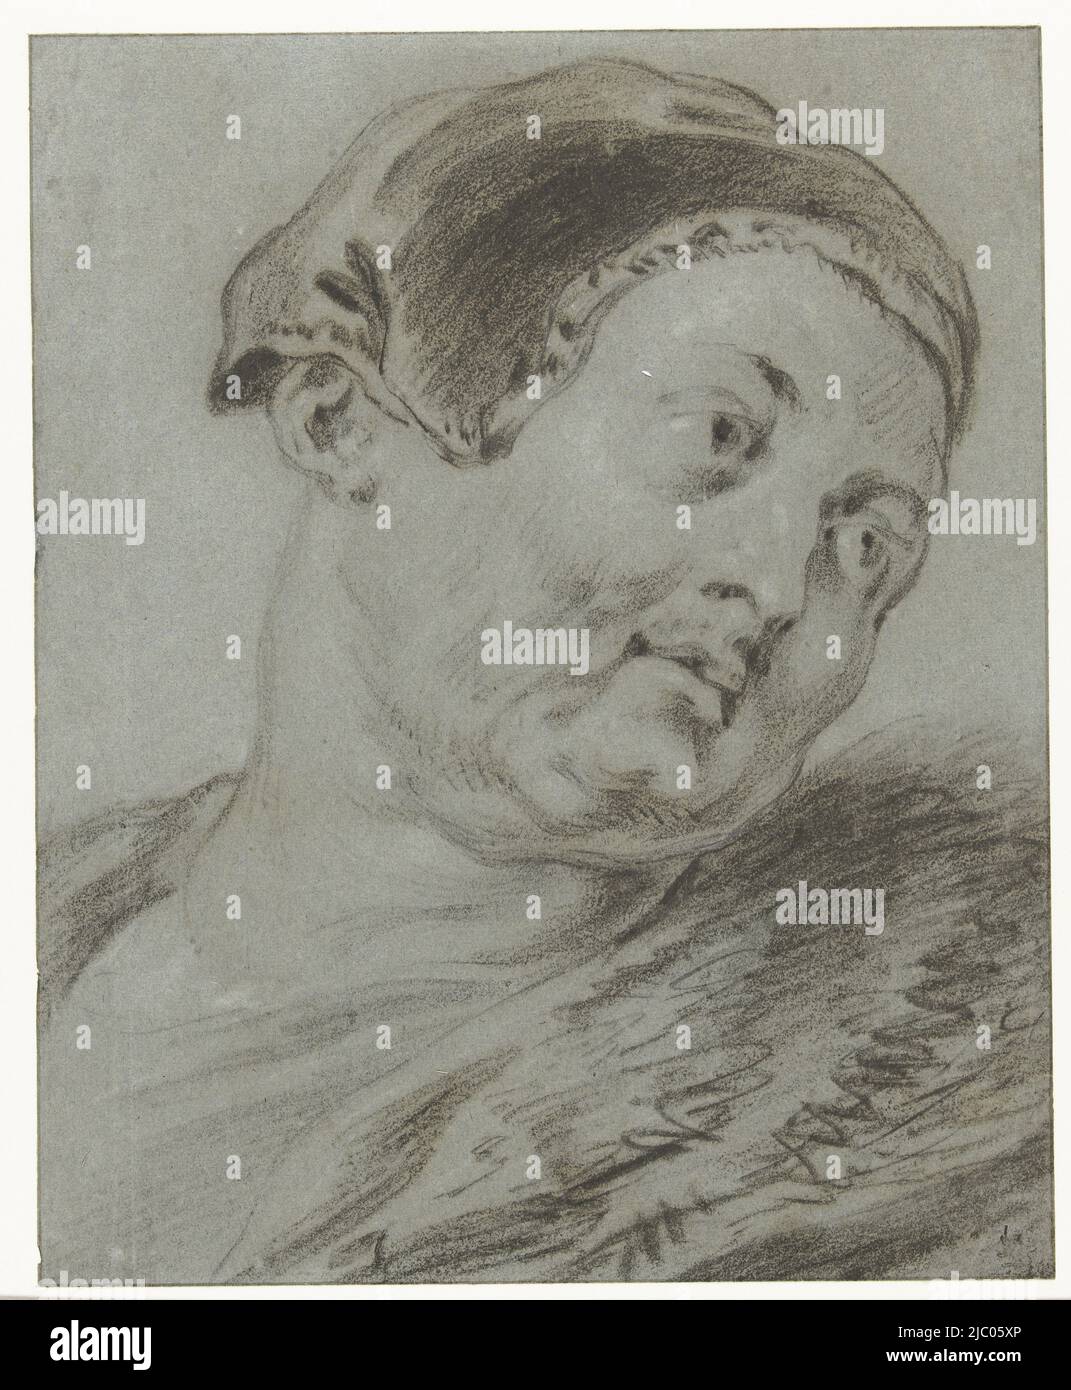 La testa dell'uomo, girata a destra, Jacques Jordaens, 1603 - 1678, disegnatore: Jacob Jordaens (i), disegnatore: Peter Paul Rubens, (attribuzione rifiutata), 1603 - 1678, carta, h 271 mm x w 219 mm Foto Stock